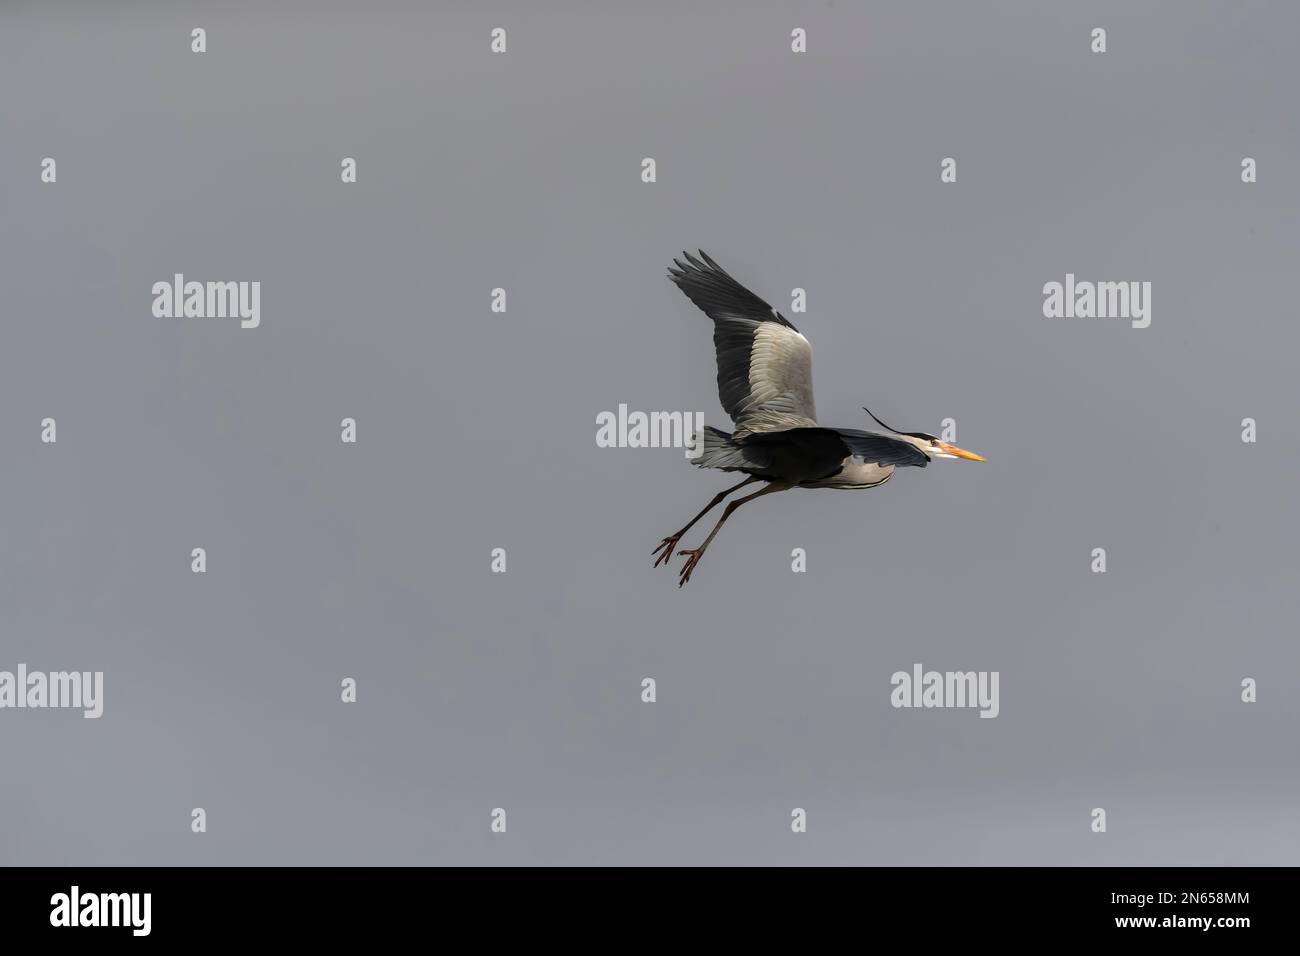 Grey heron bird in flight with background plain sky Stock Photo